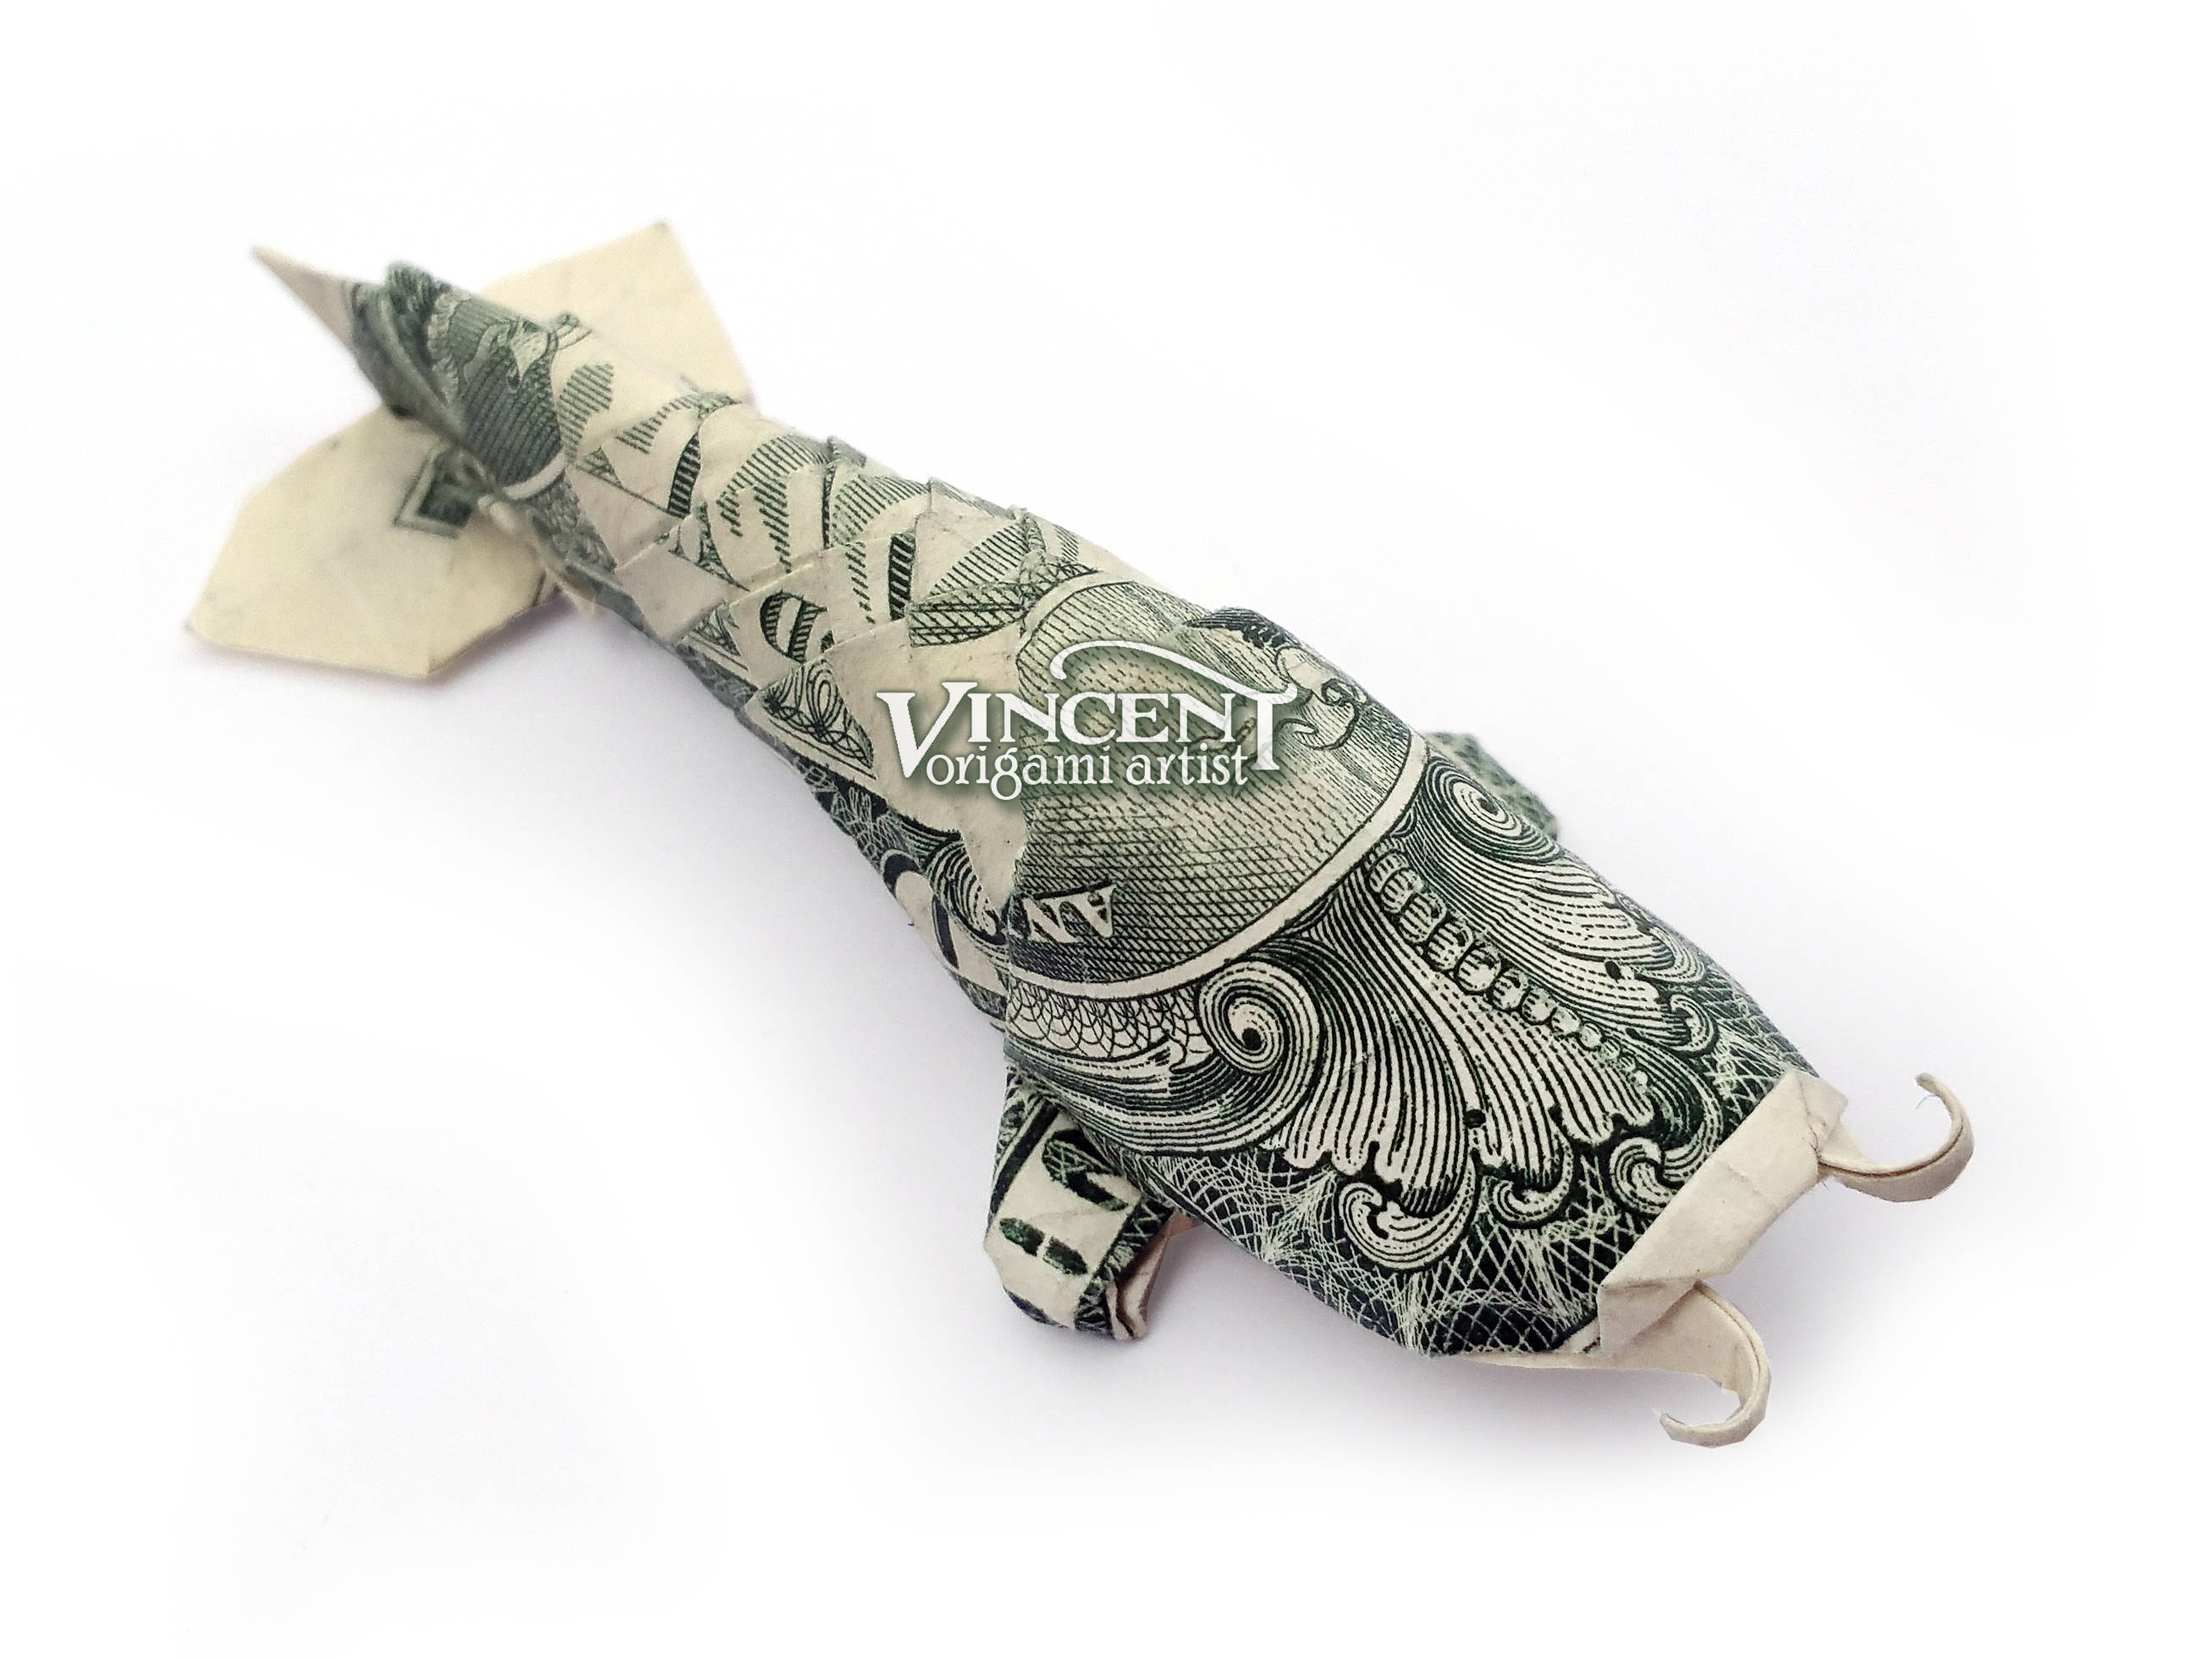 Fish Money Origami Koi Fish Money Origami Art Dollar Bill Animal Sea Creature Cash Sculptors Bank Note Handmade